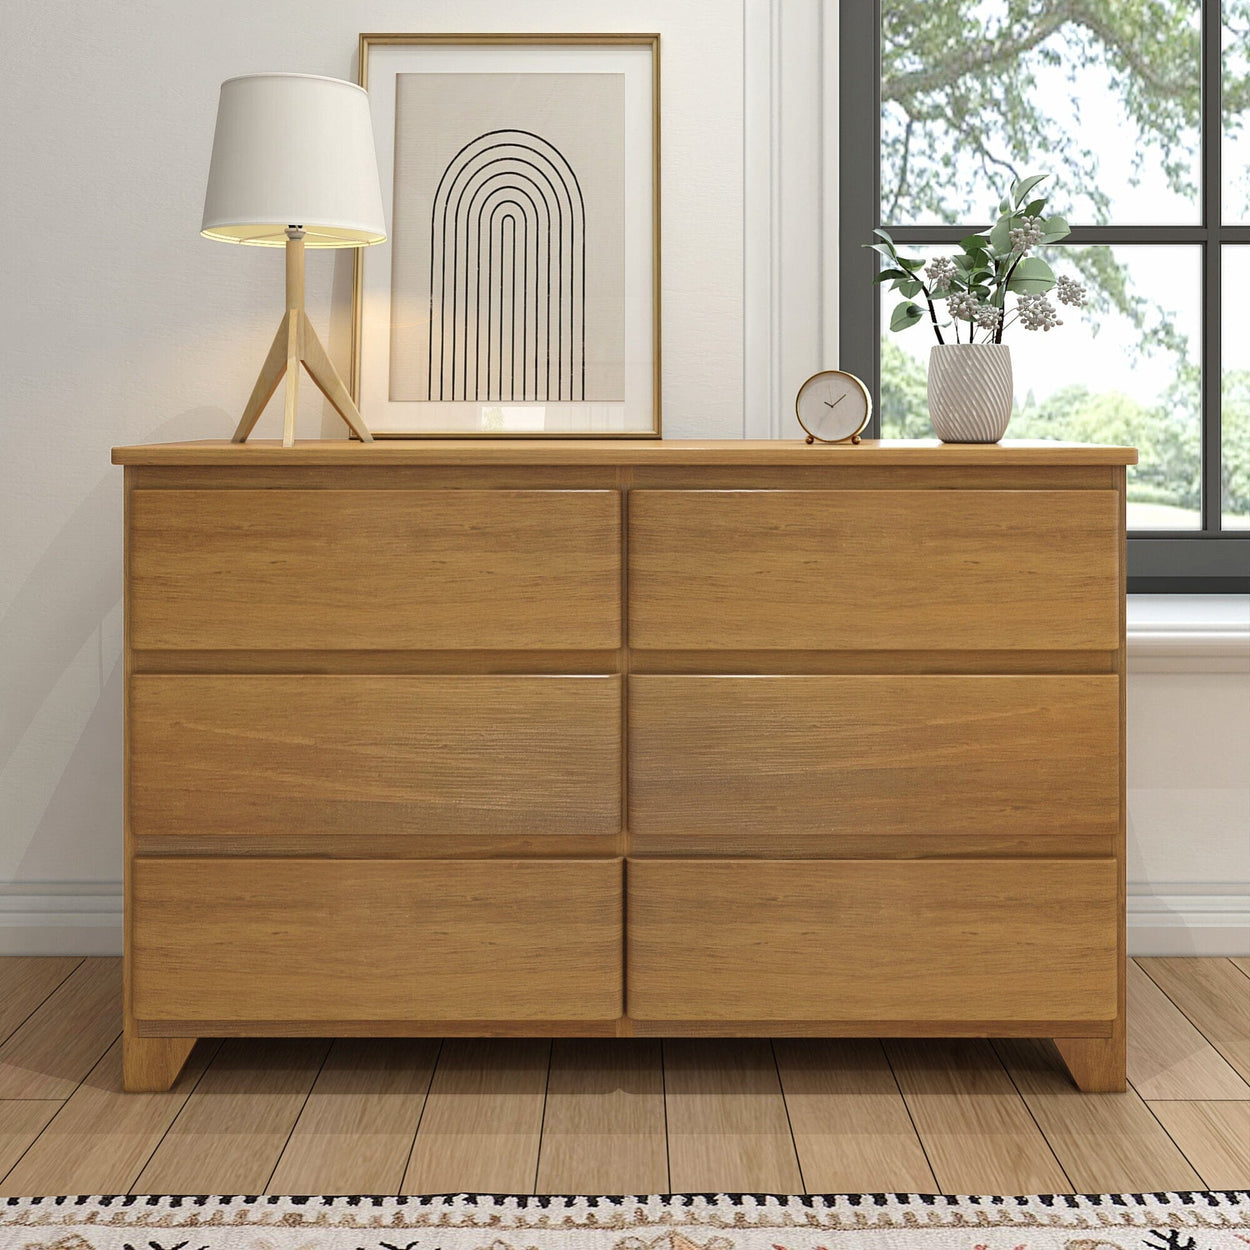 190006-187 : Furniture K/D 6 Drawer Dresser w/ metal drawer glides (52"L x 15.75"W x 32.75"H), Pecan